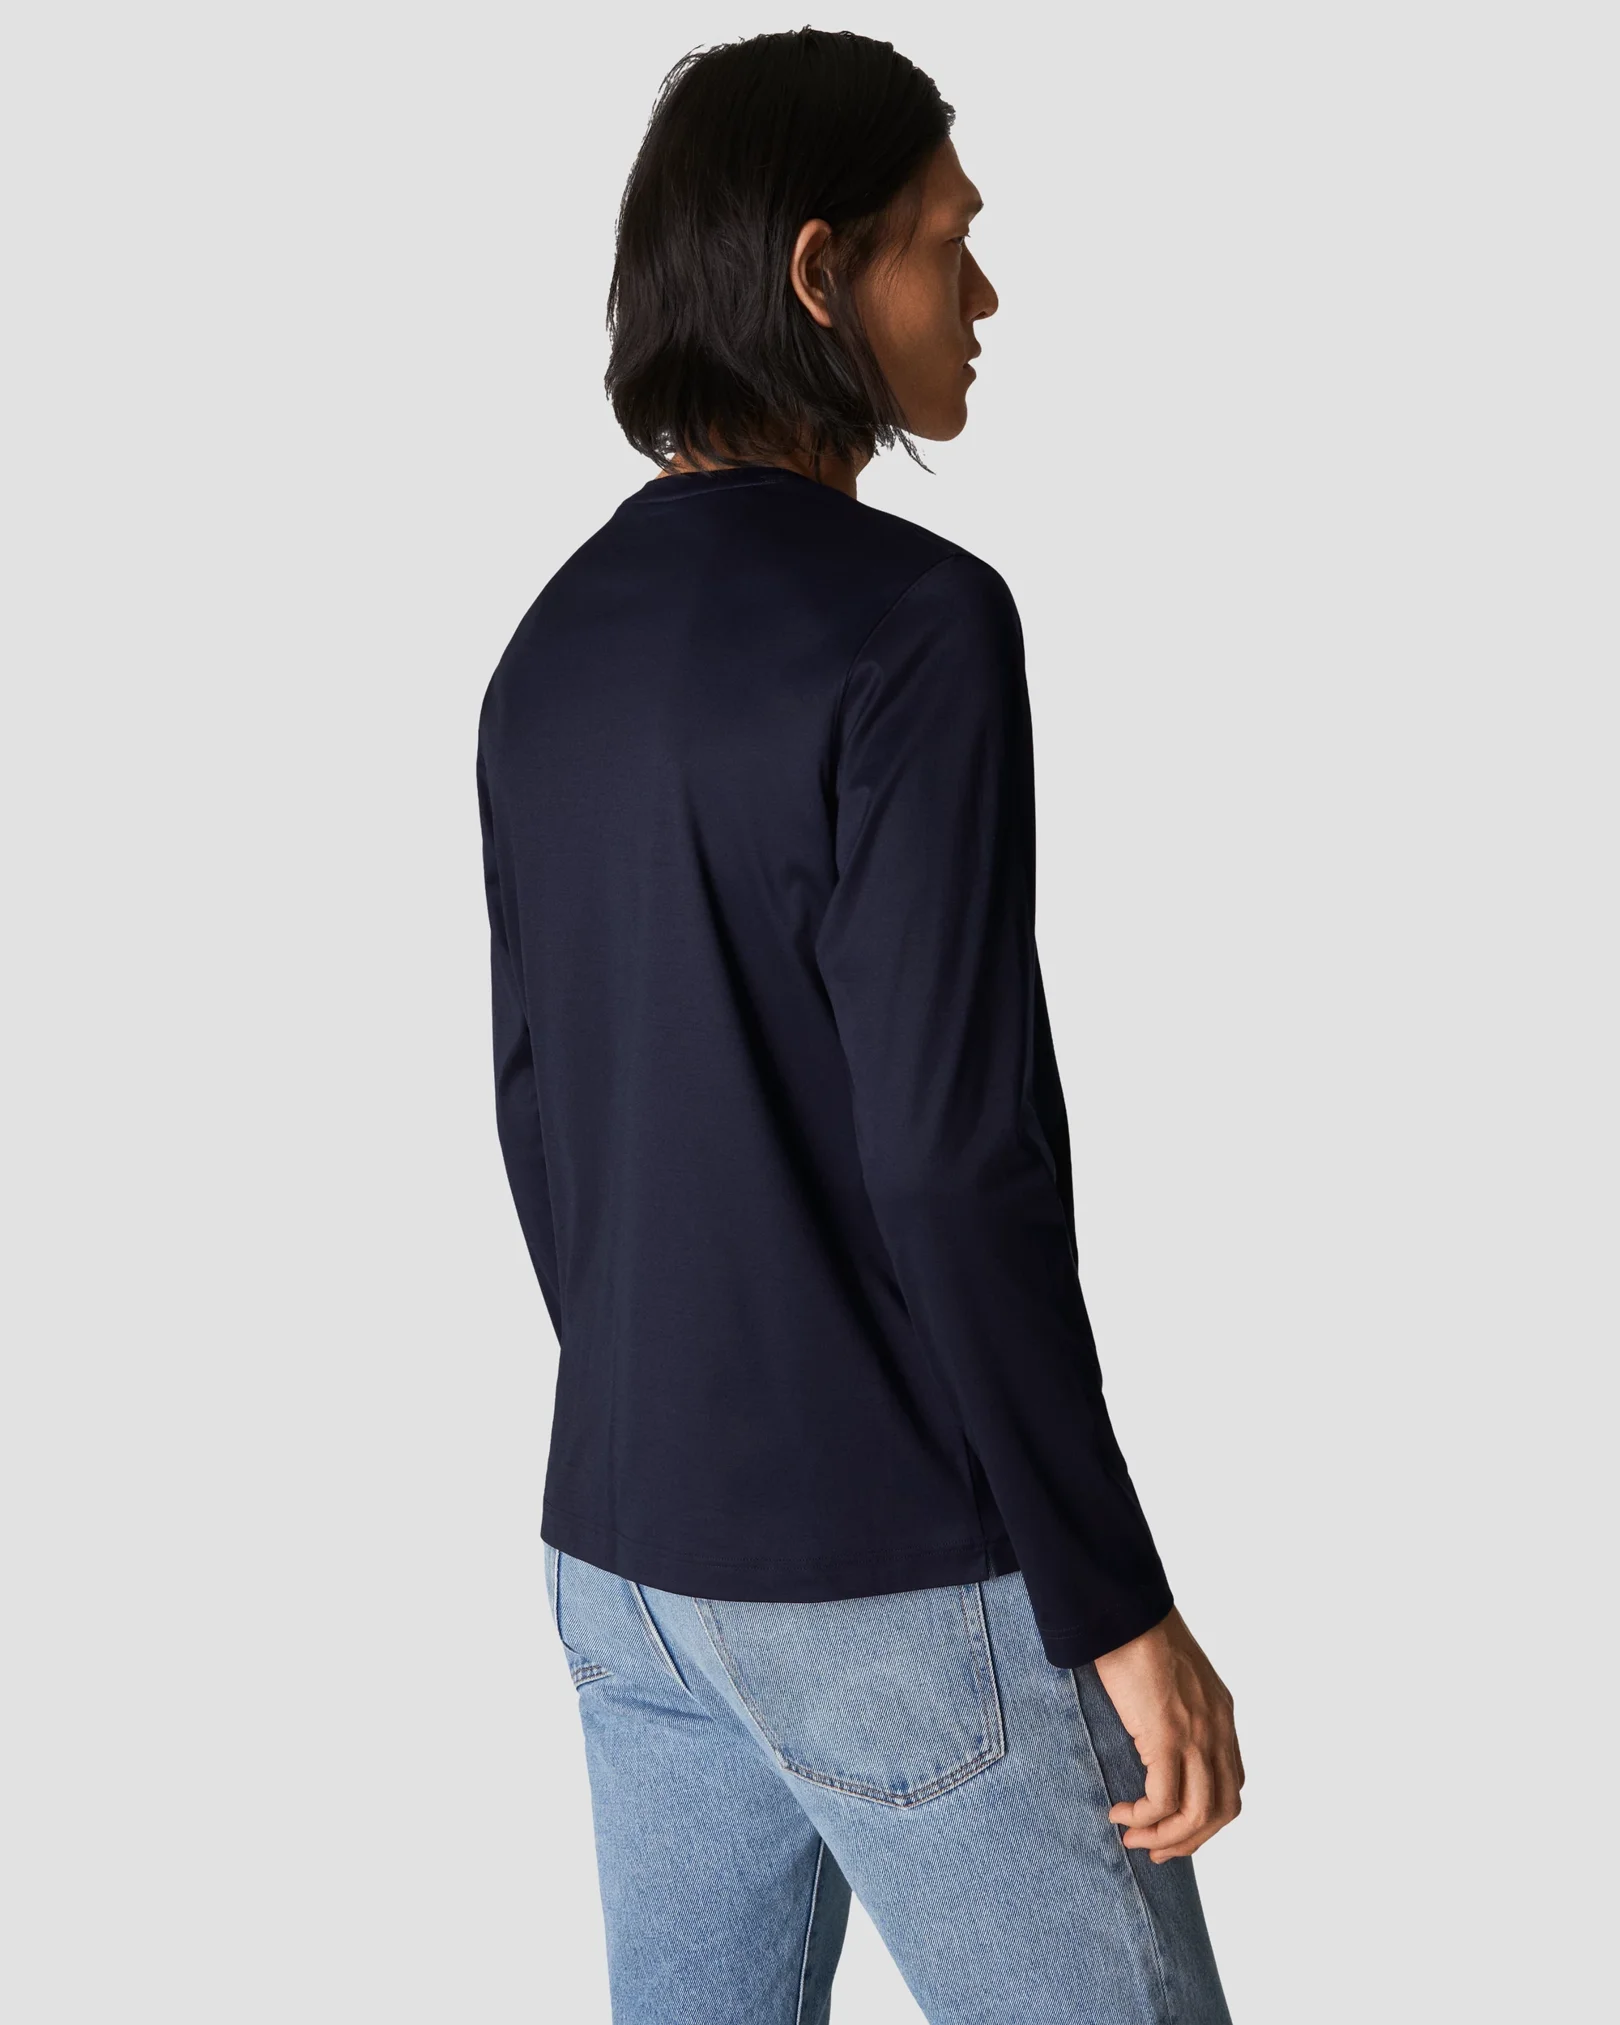 Eton - navy blue jersey t shirt long sleeve